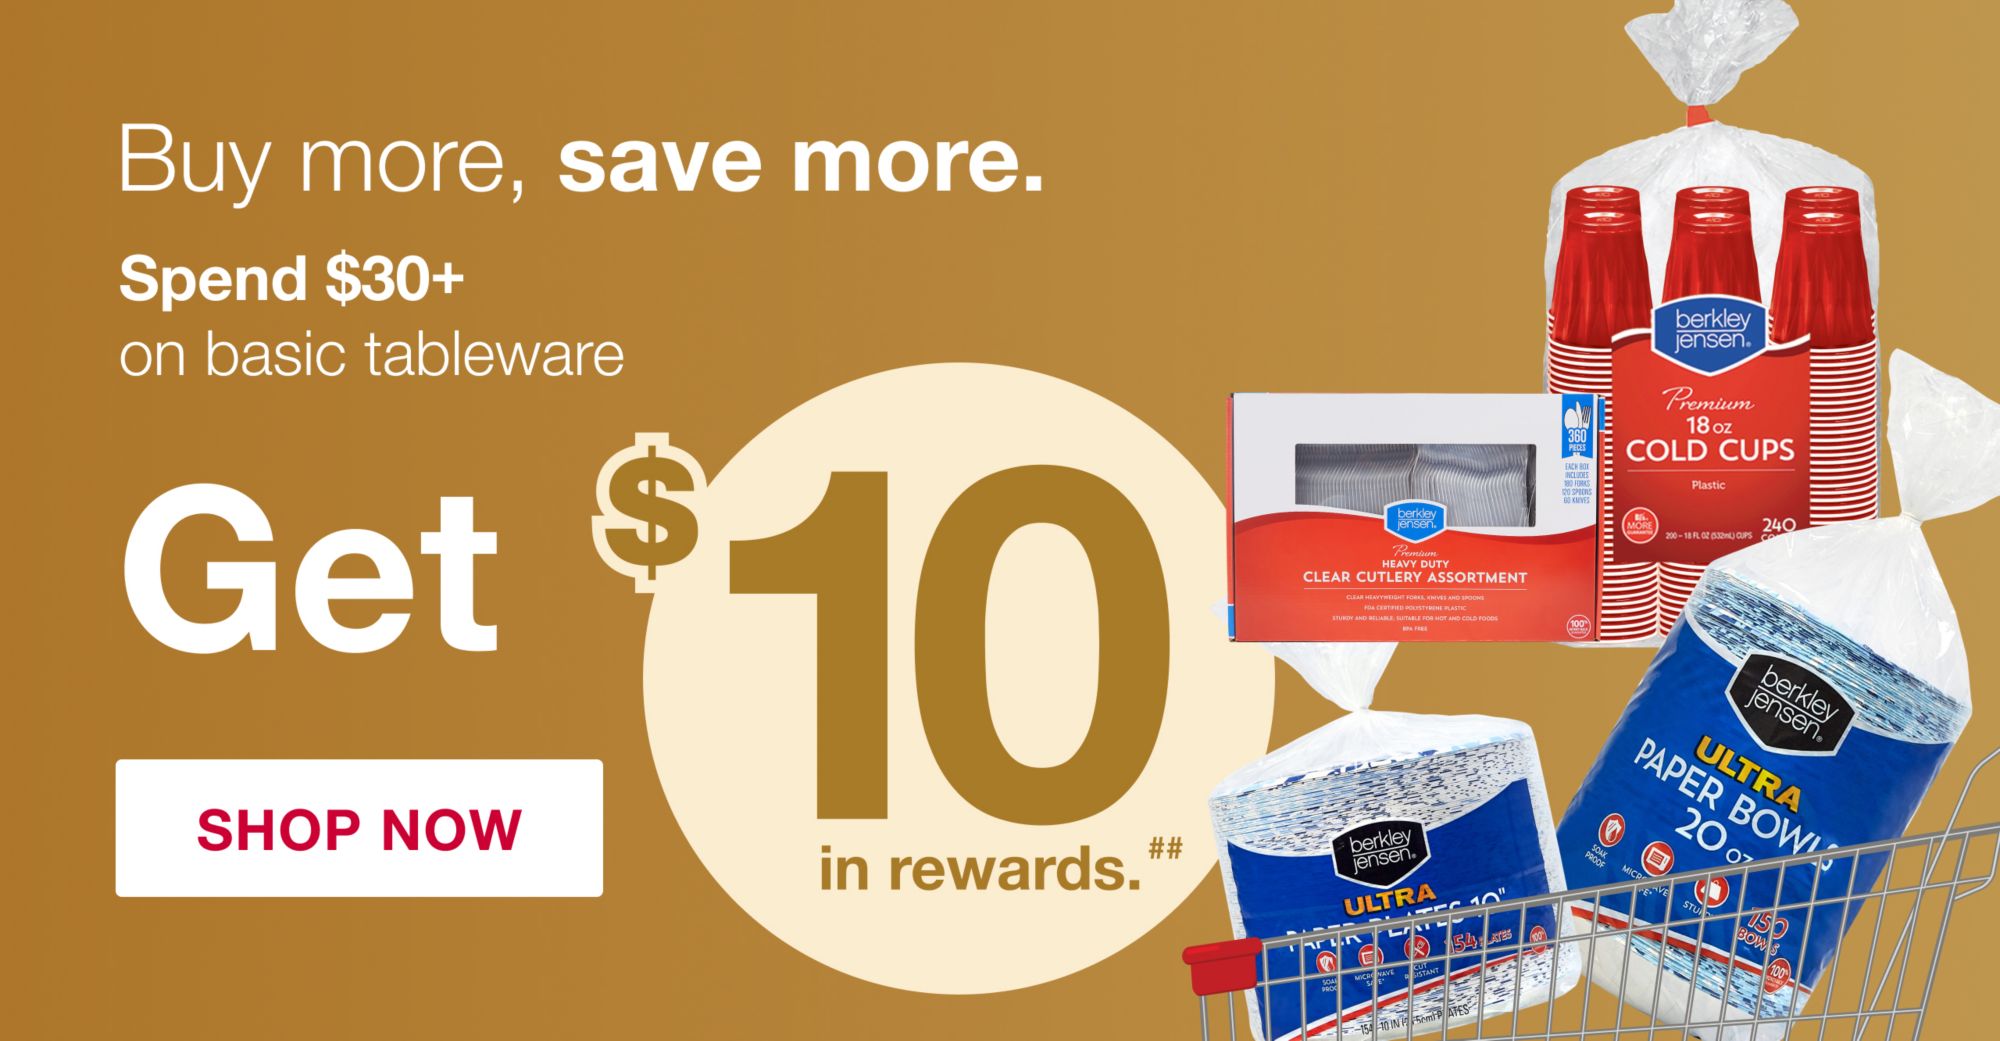 Spend $30 on basic tableware, get $10 in rewards.#